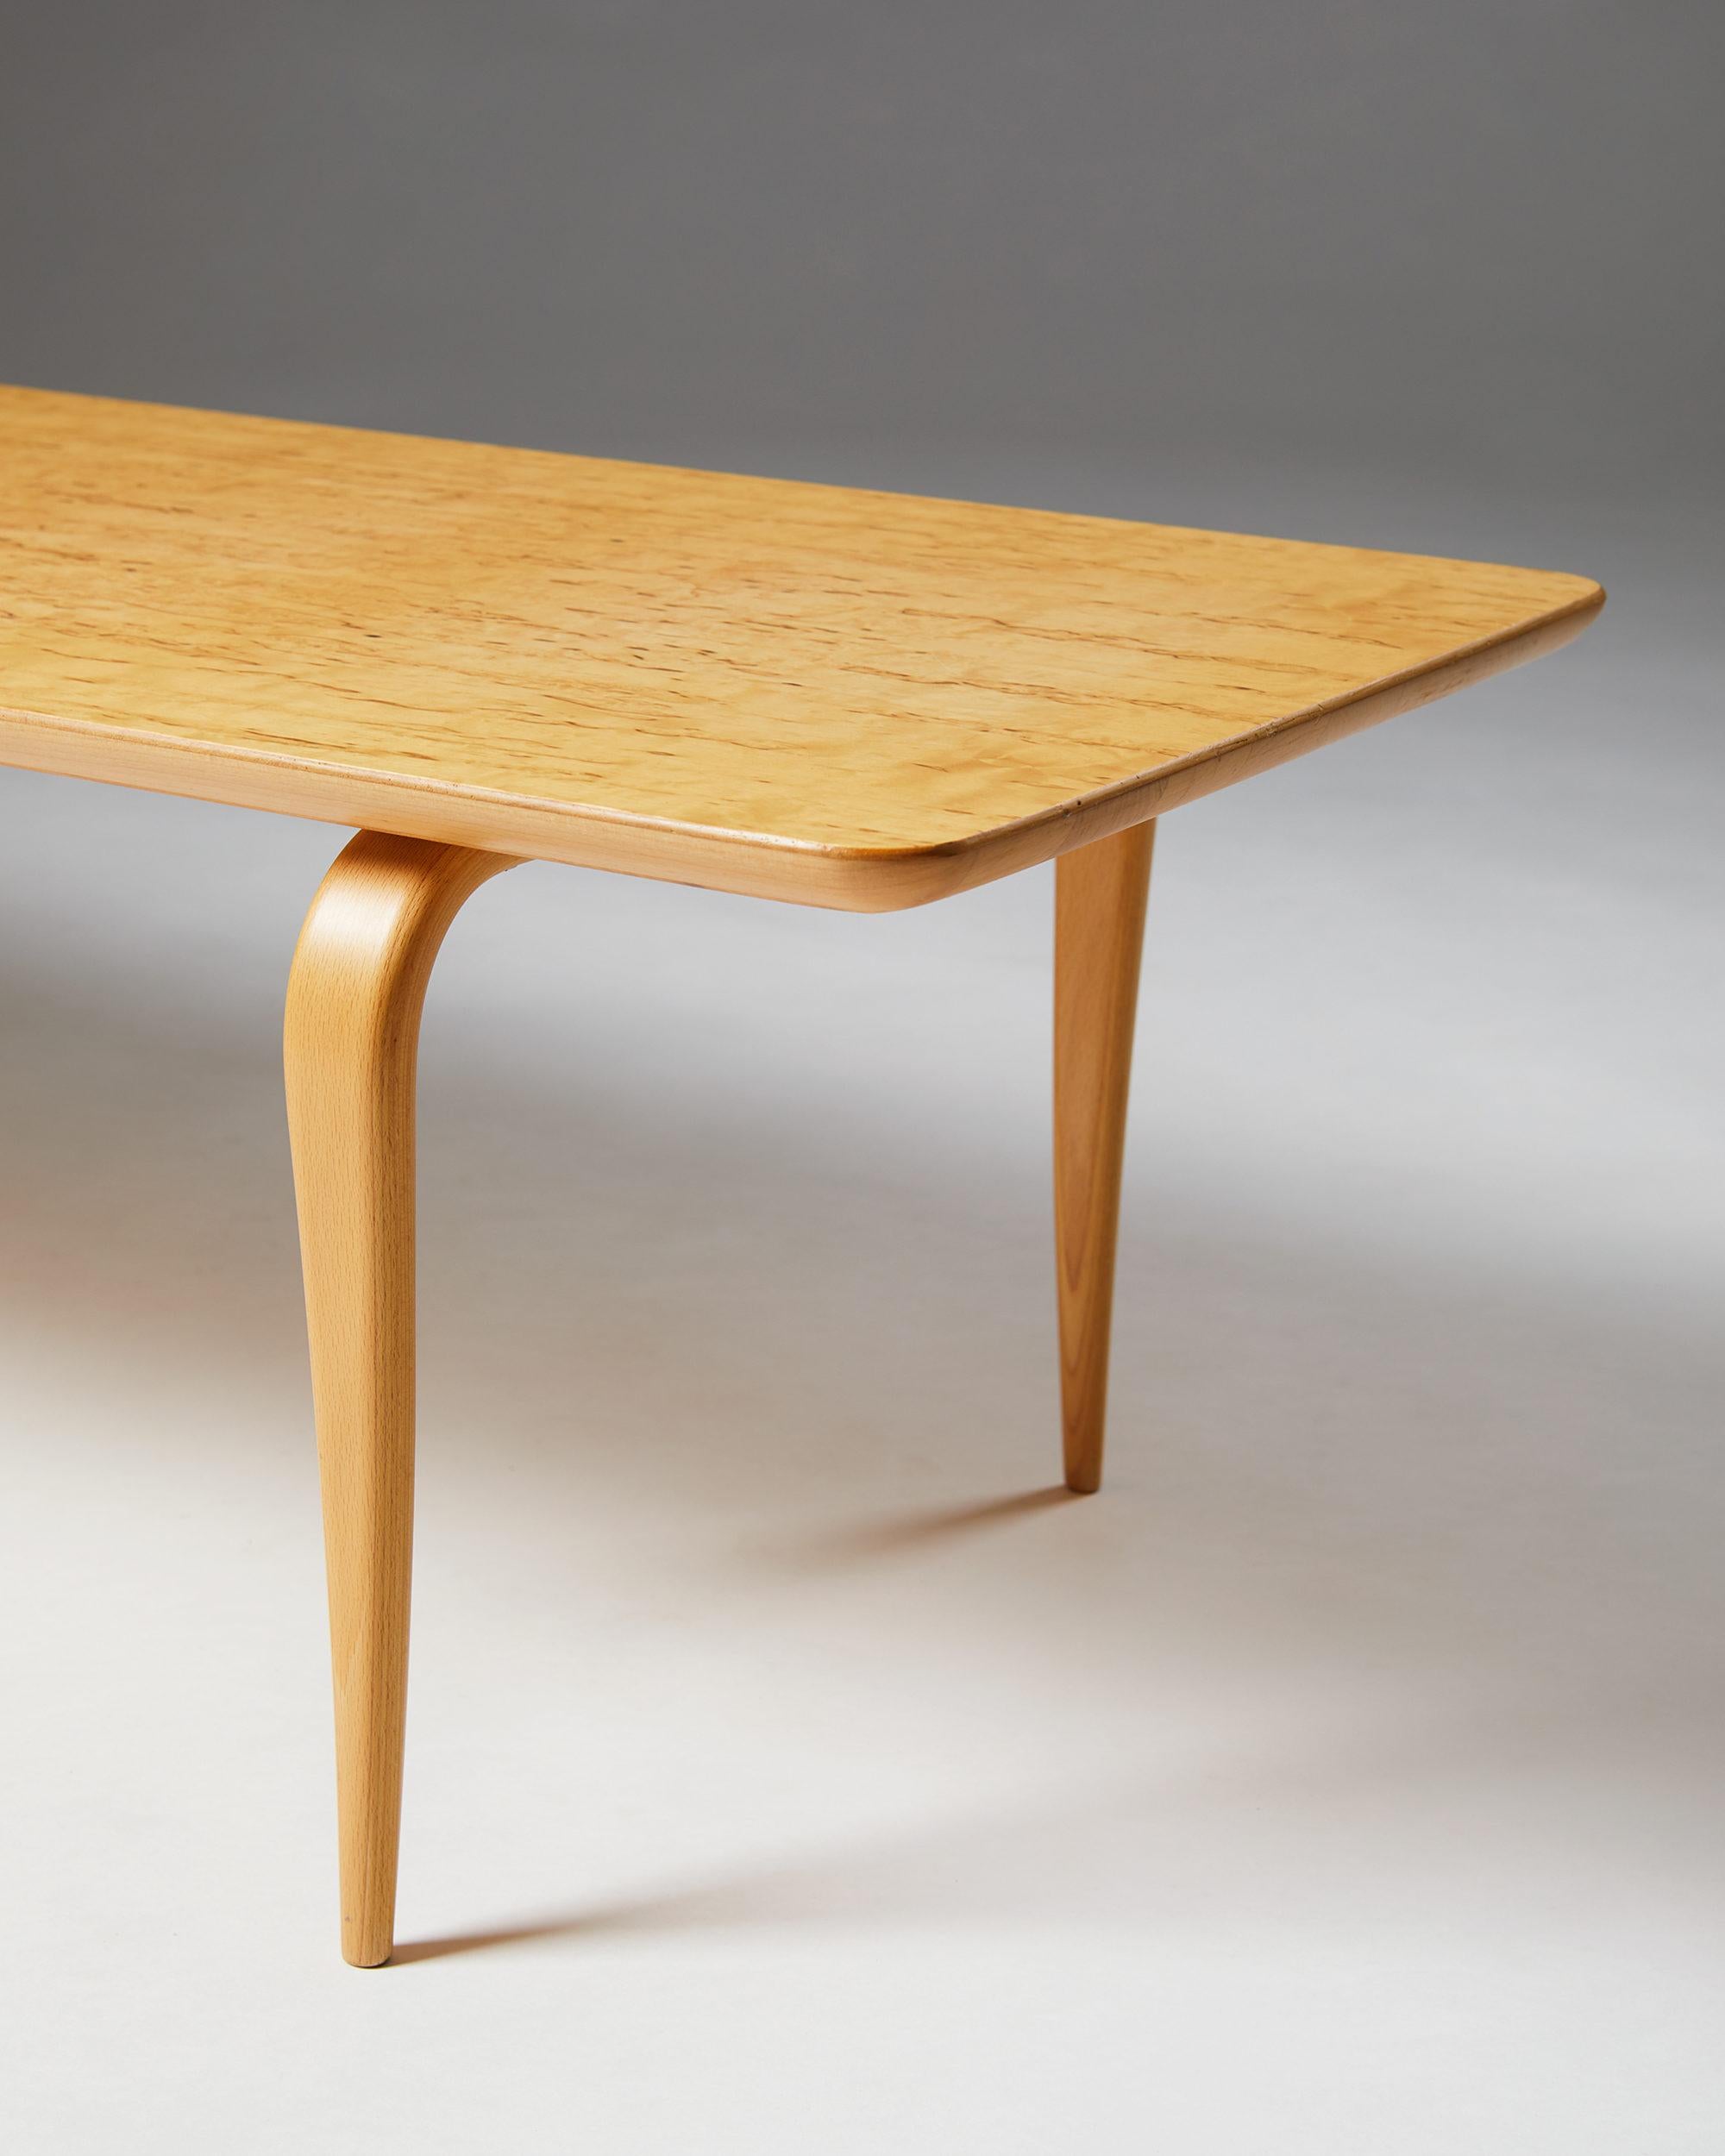 Birch Bench/Coffee Table “Annika” Designed by Bruno Mathsson